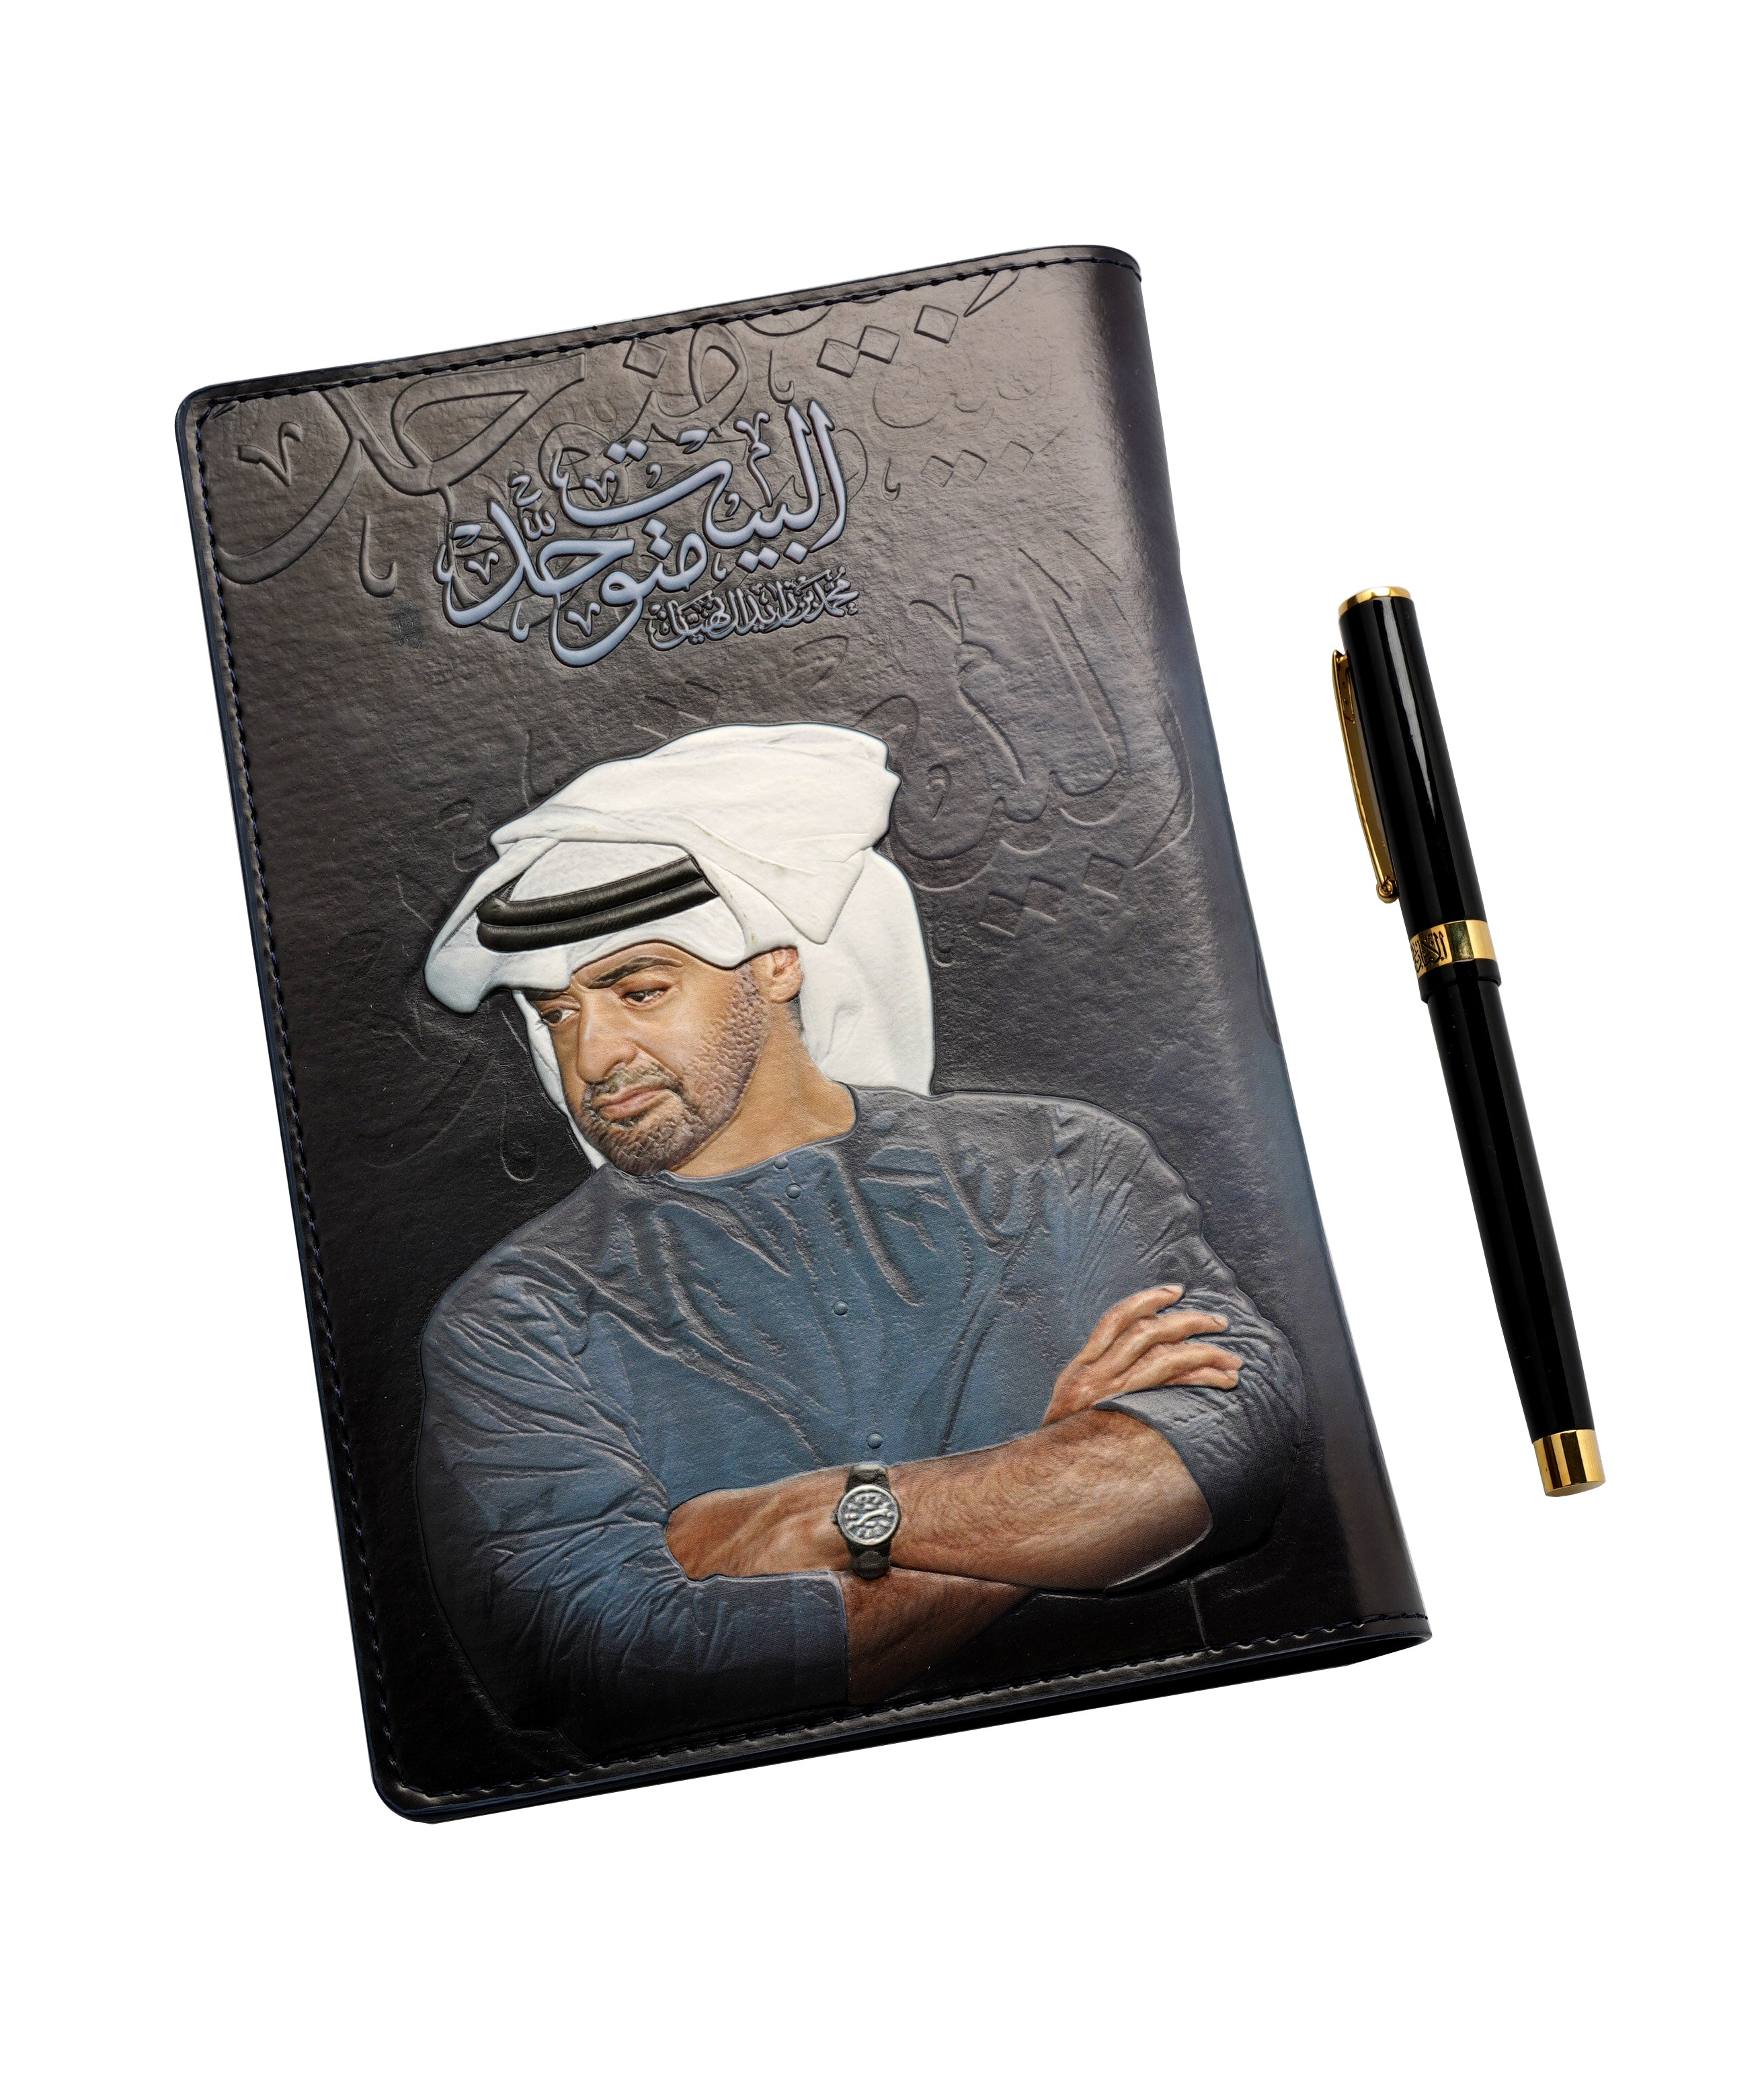 Rovatti Notebook Mohammad Bin Zayed | stationary gift items | luxury gifts for men & women